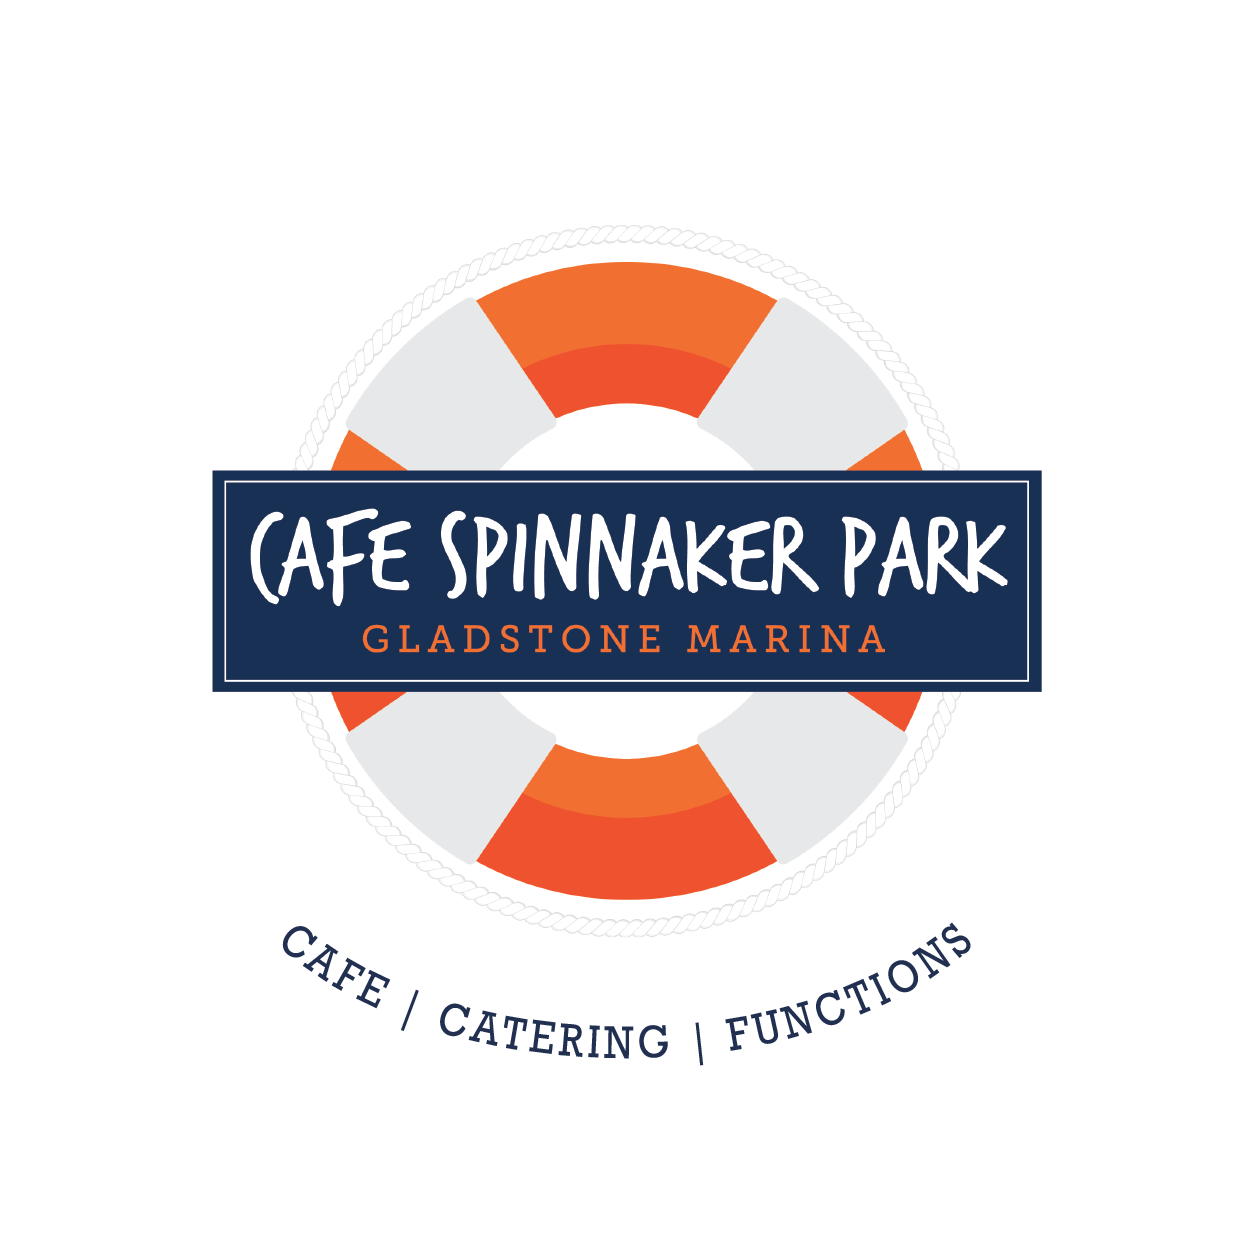 Café Spinnaker Park Gladstone